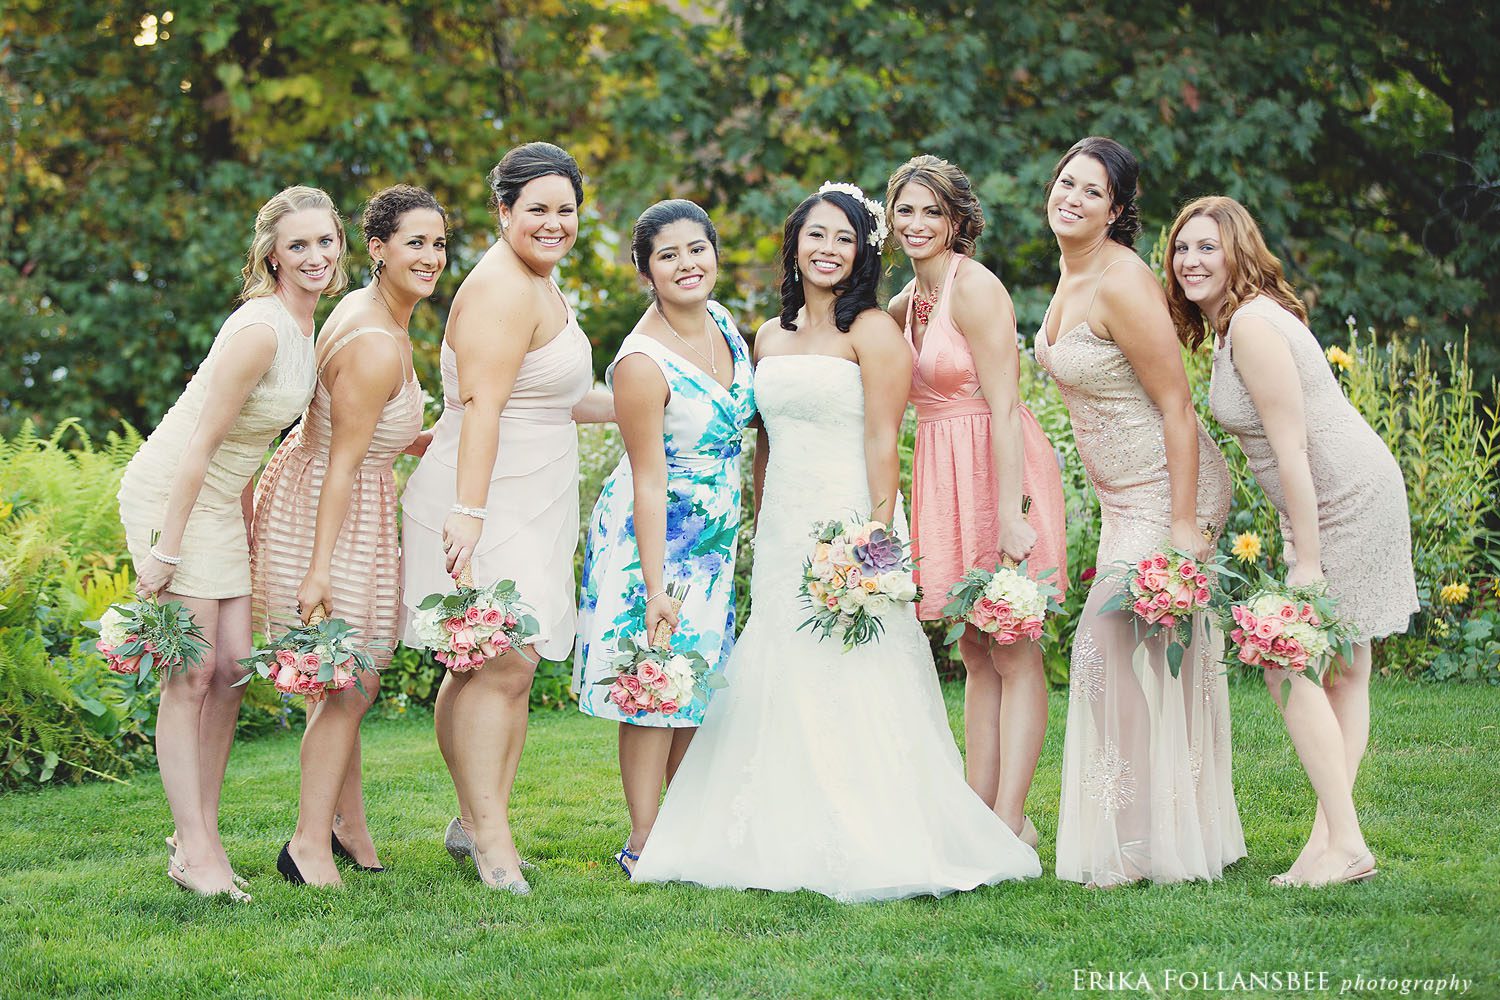 Mile Away Restaurant Wedding Photo | Bridesmaids